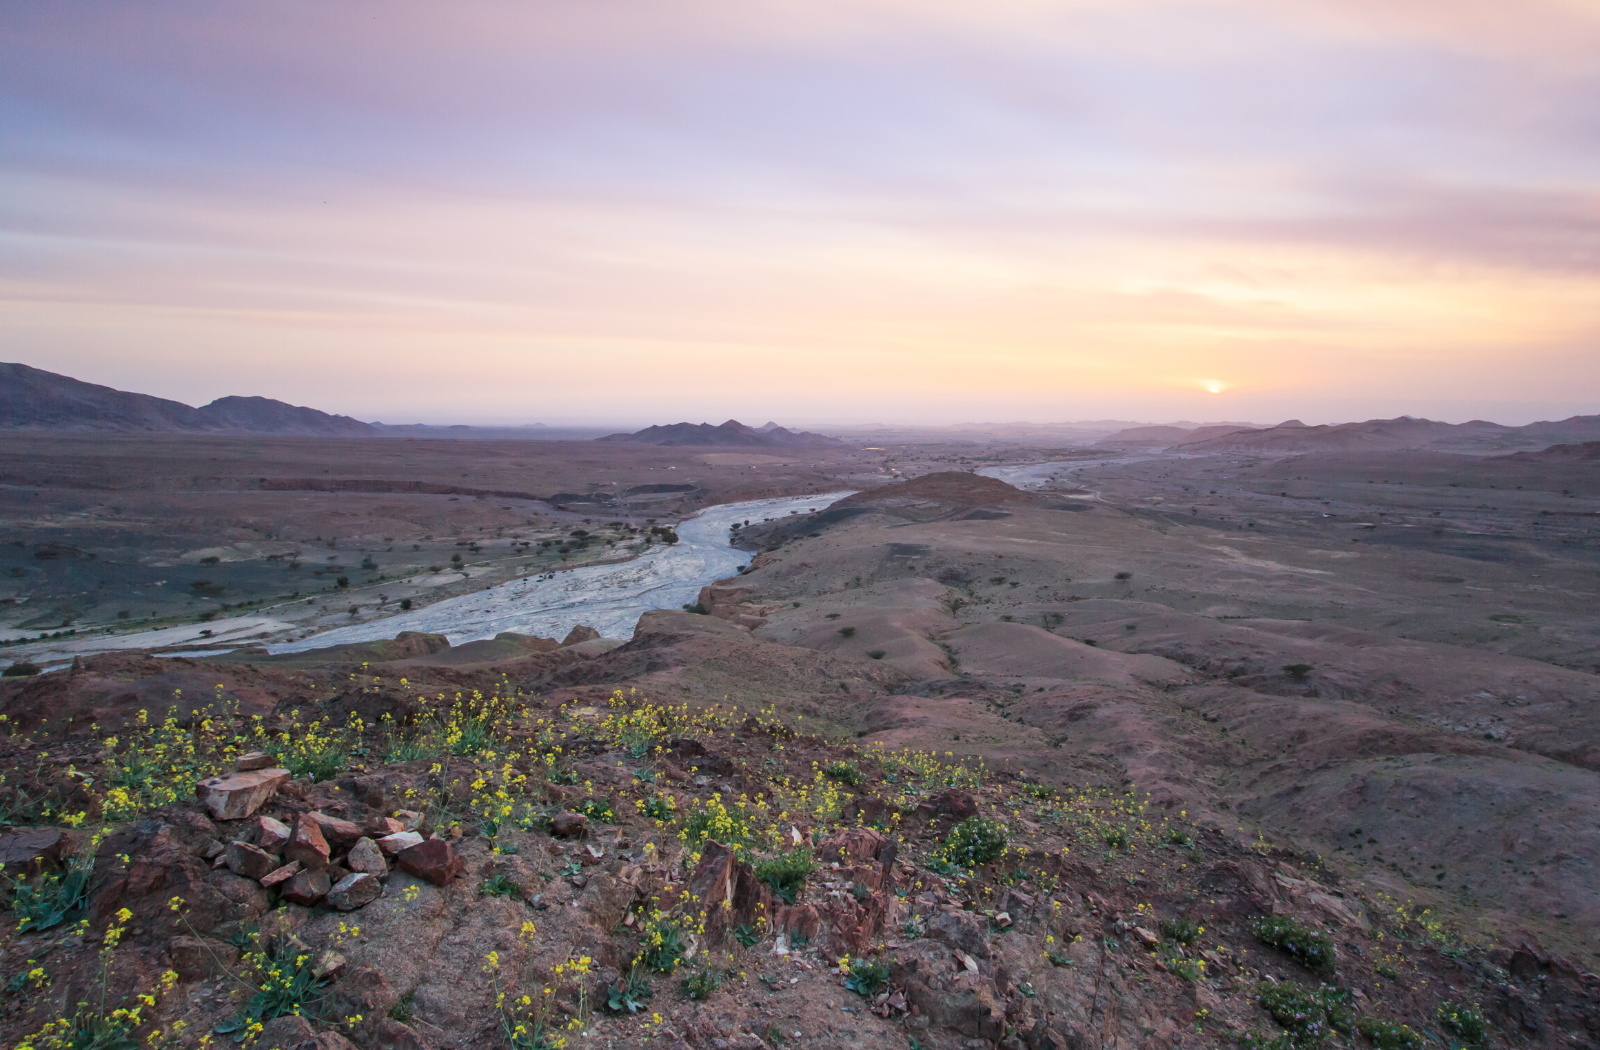 Sunset in the Feynan Natural Reserve, Jordan